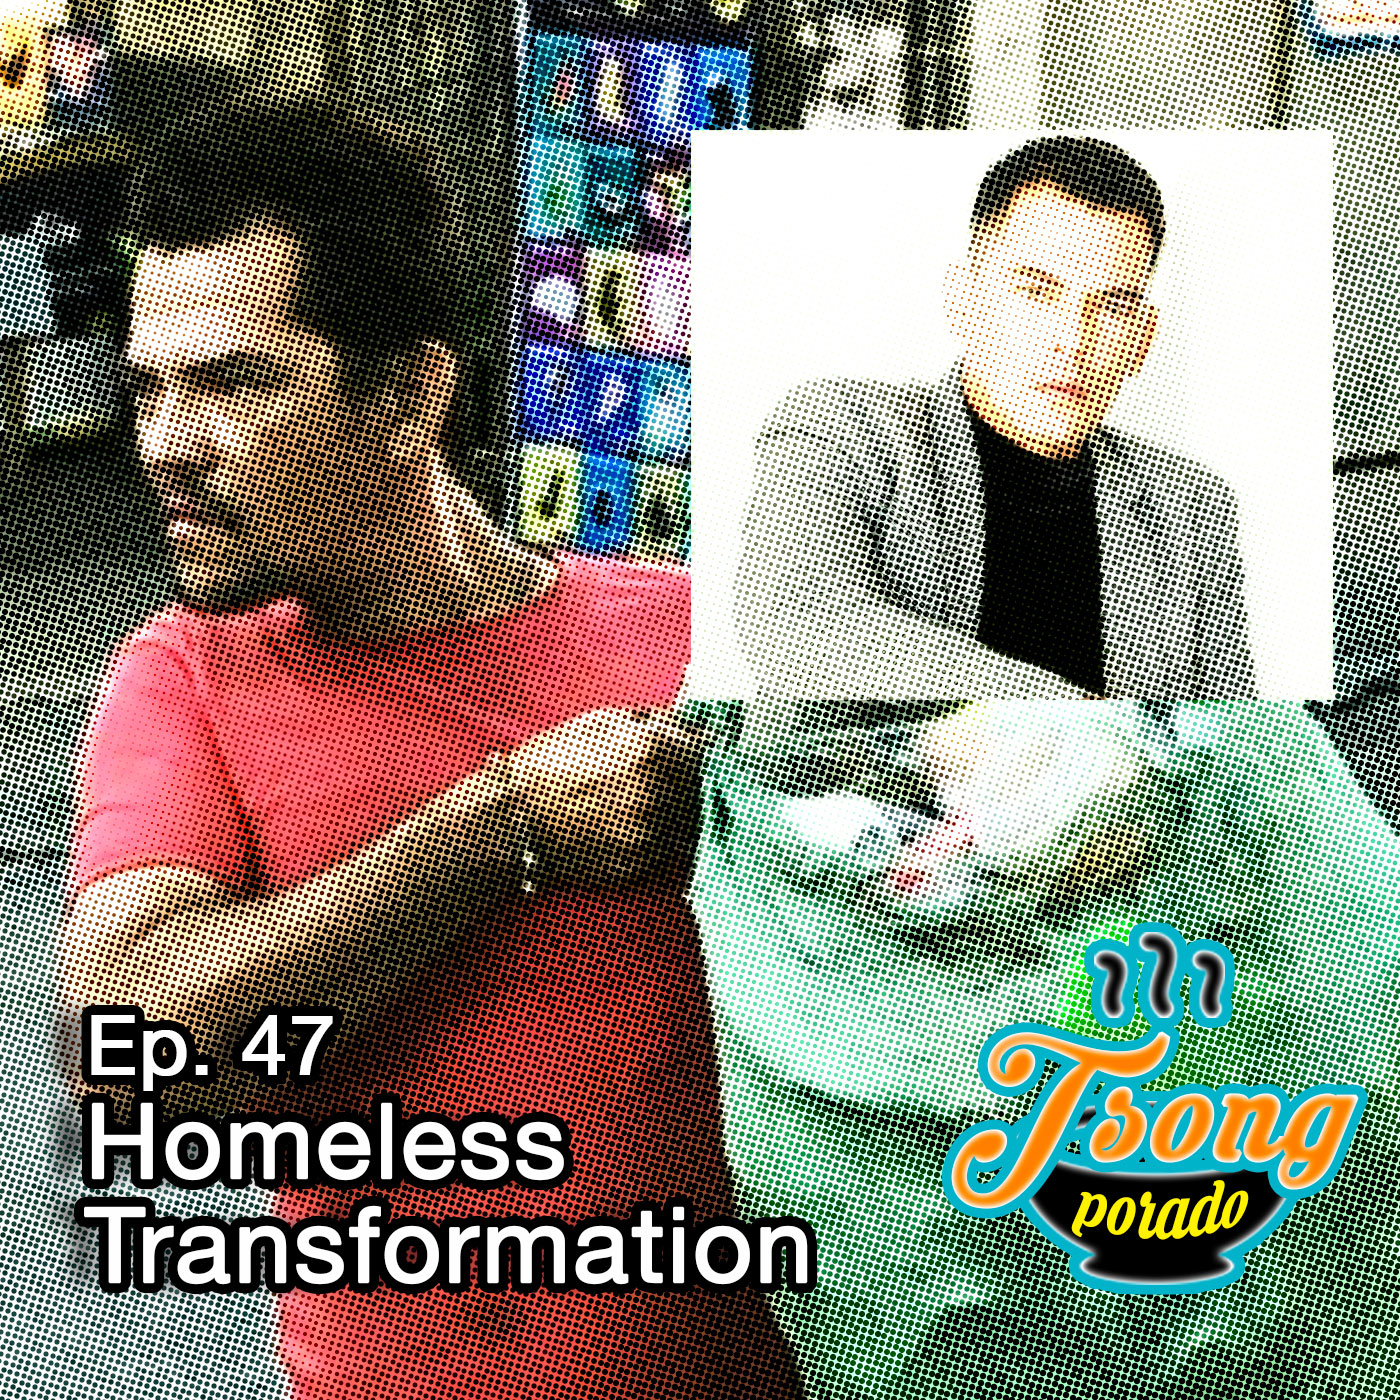 Ep. 47 - Homeless Transformation